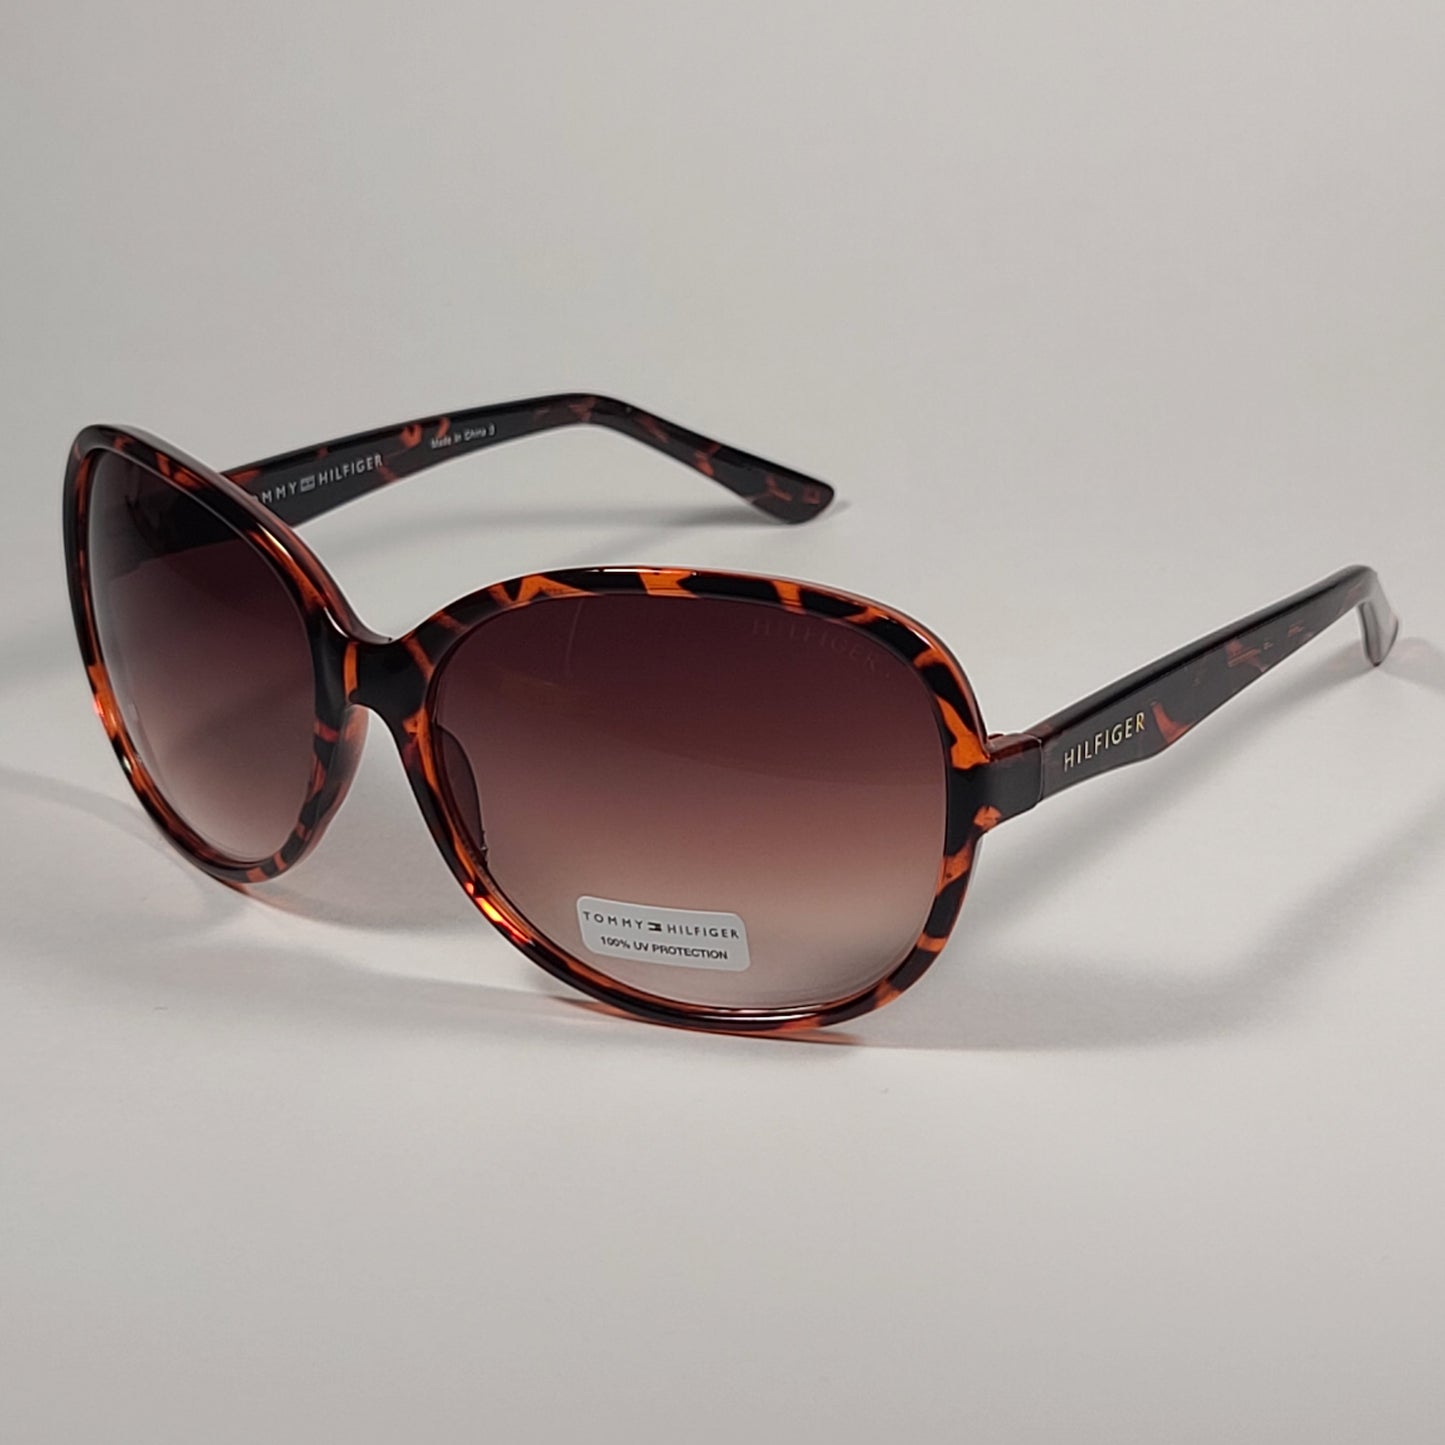 Tommy Hilfiger Camilla Oversize Sunglasses Brown Tortoise Gradient Lens CAMILLA WP OL350 - Sunglasses